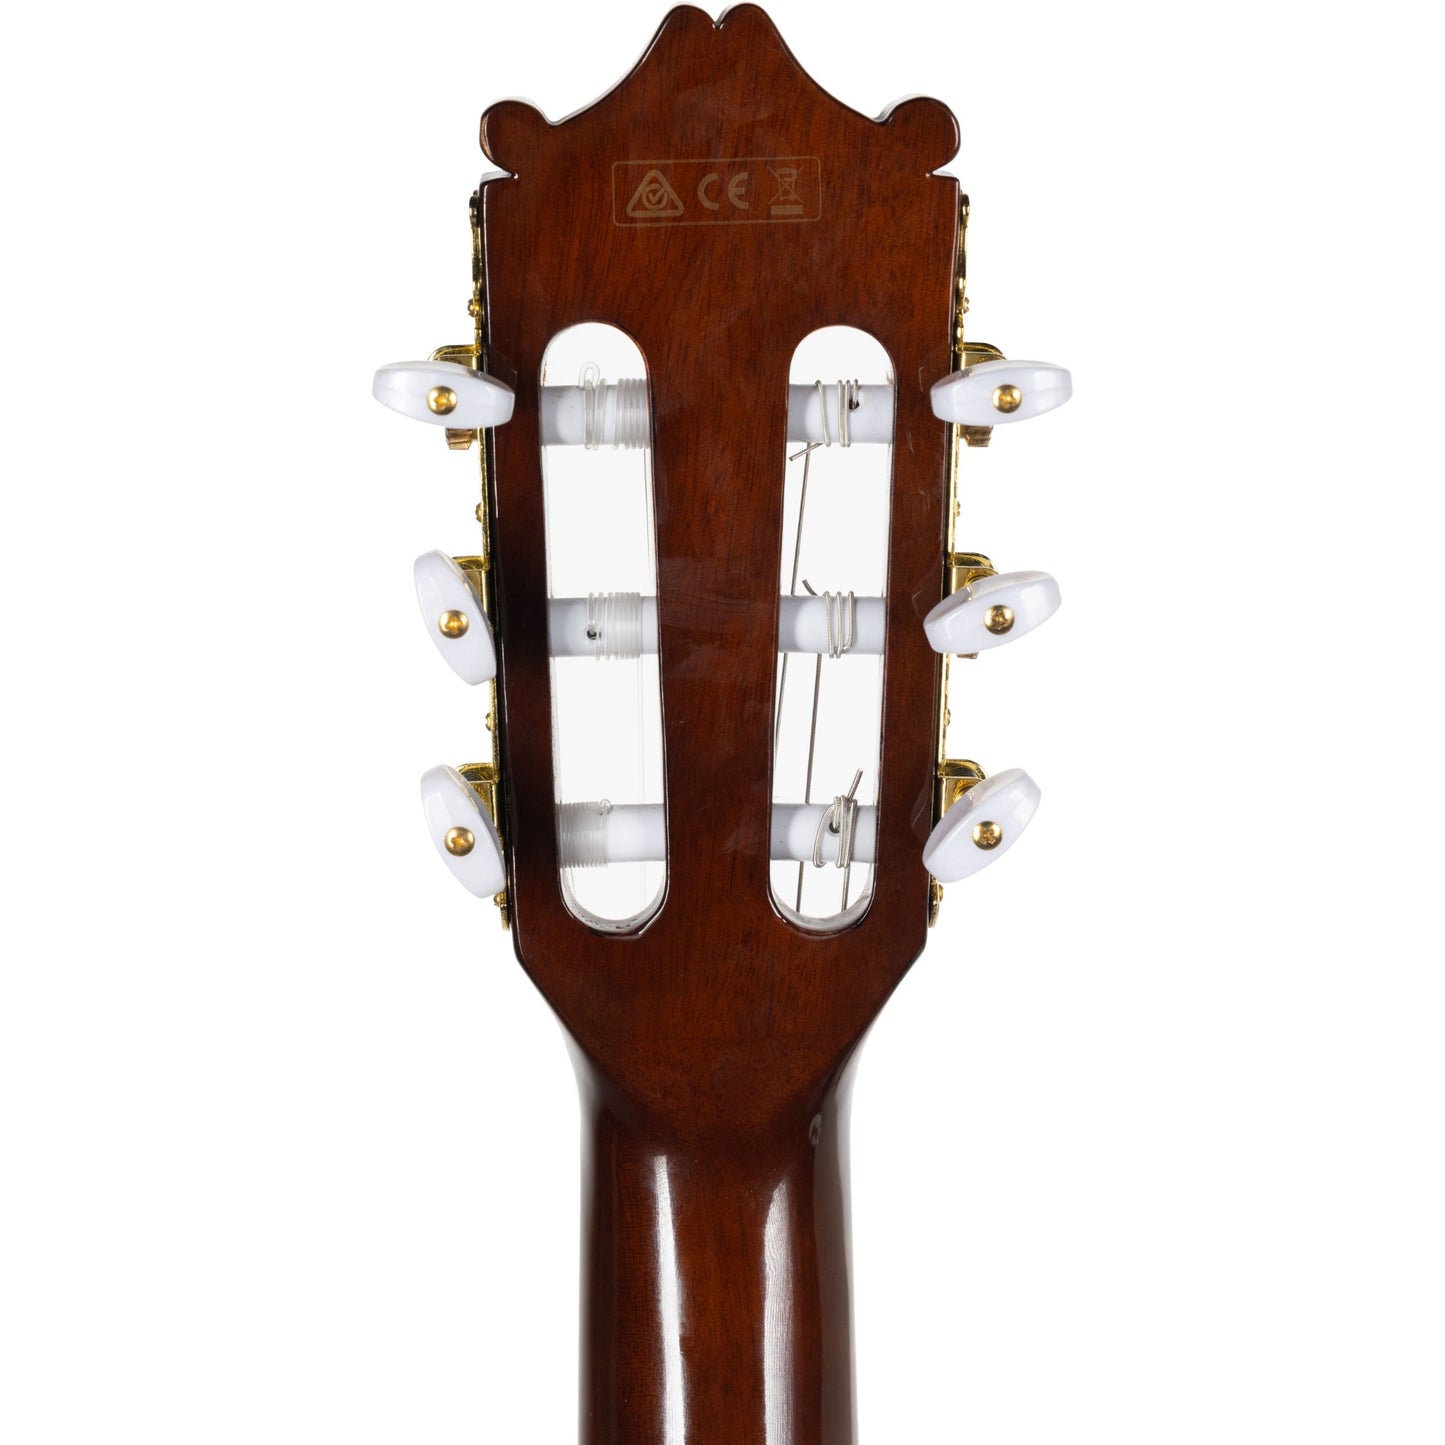 Ibanez GA5TCE Classical Thin Body Acoustic/Elec Natural Guitar